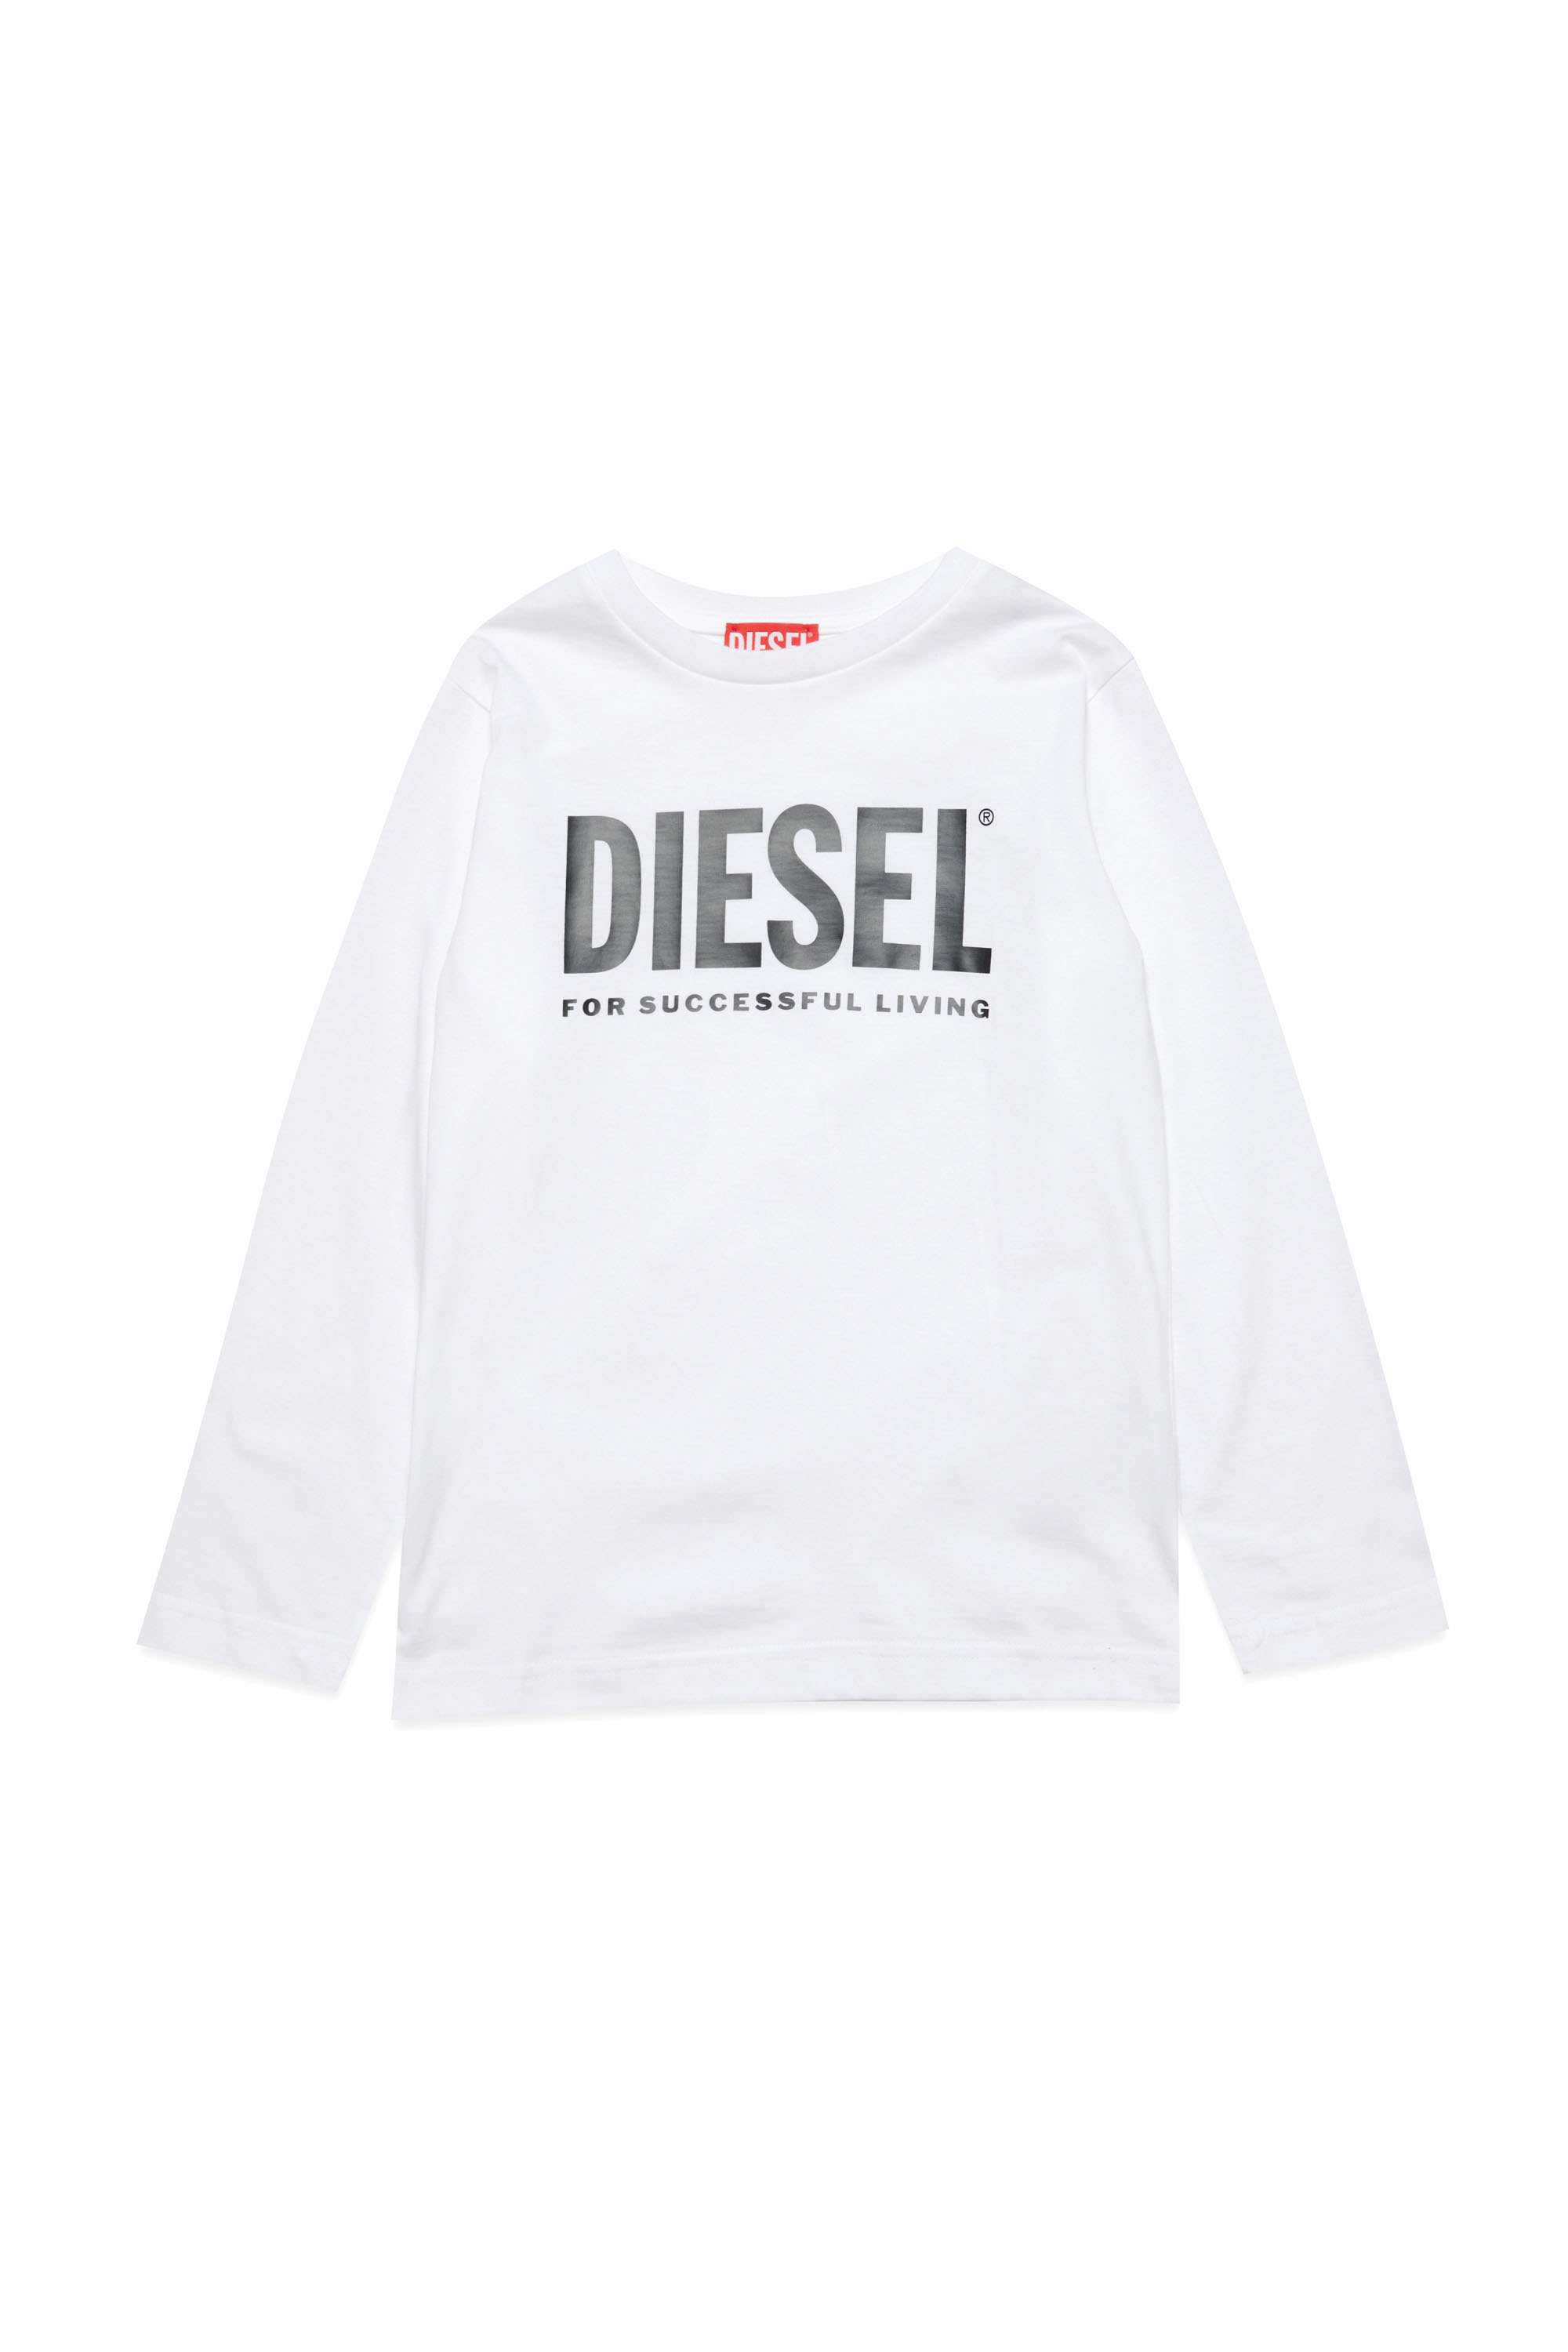 Diesel - LTGIM DI ML, White - Image 1